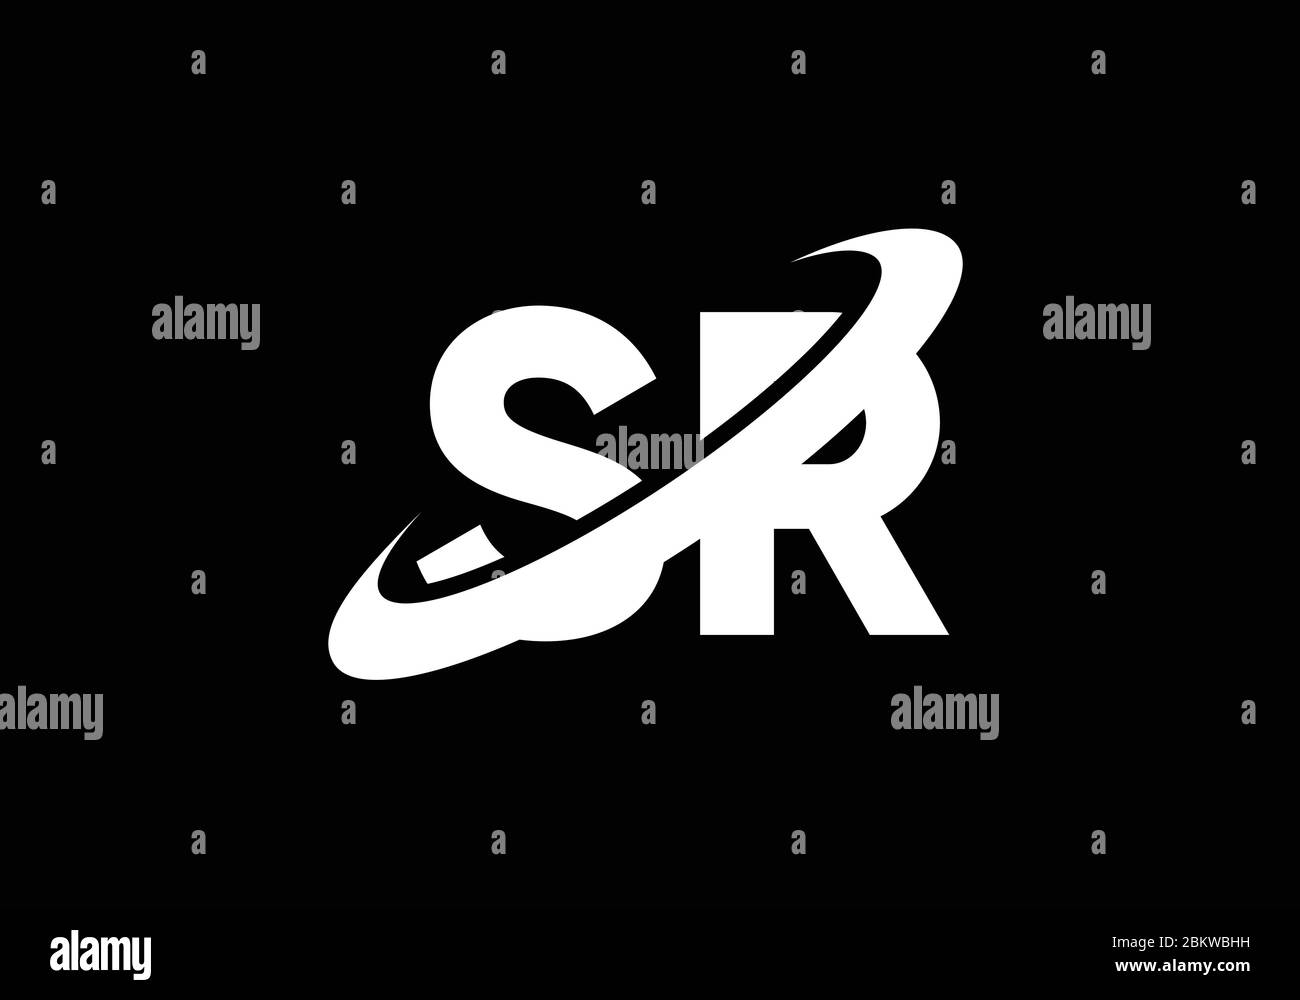 Initial Monogram Letter SR Logo Design Vector Template. Graphic Alphabet Symbol for Corporate Business Identity Stock Vector